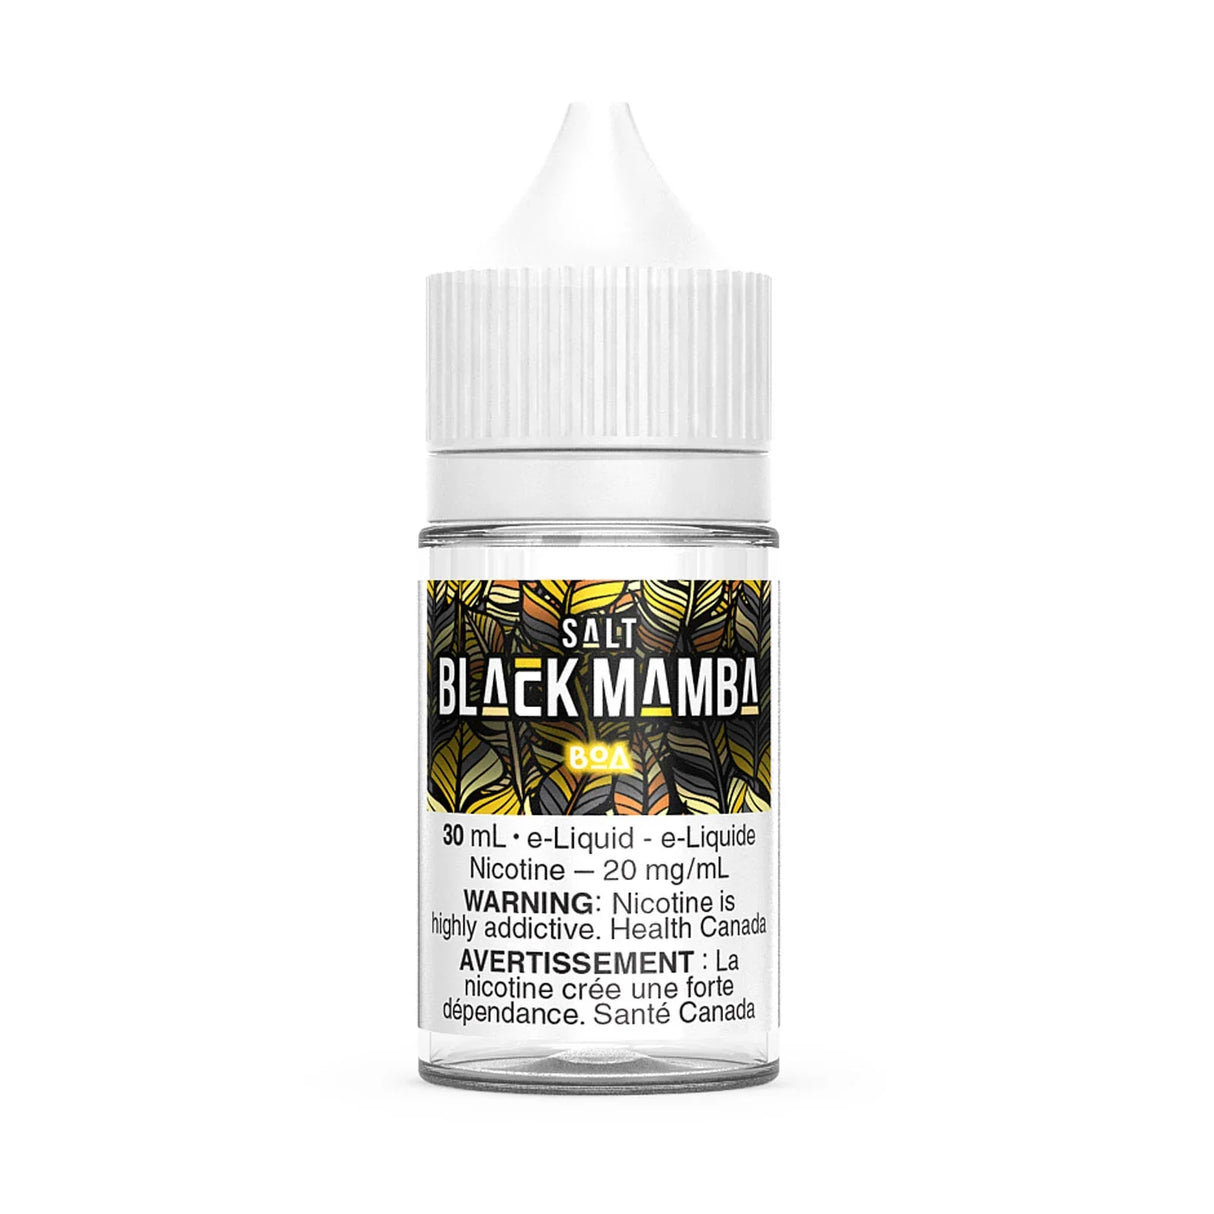 Black Mamba Salts - BOA - 30ml